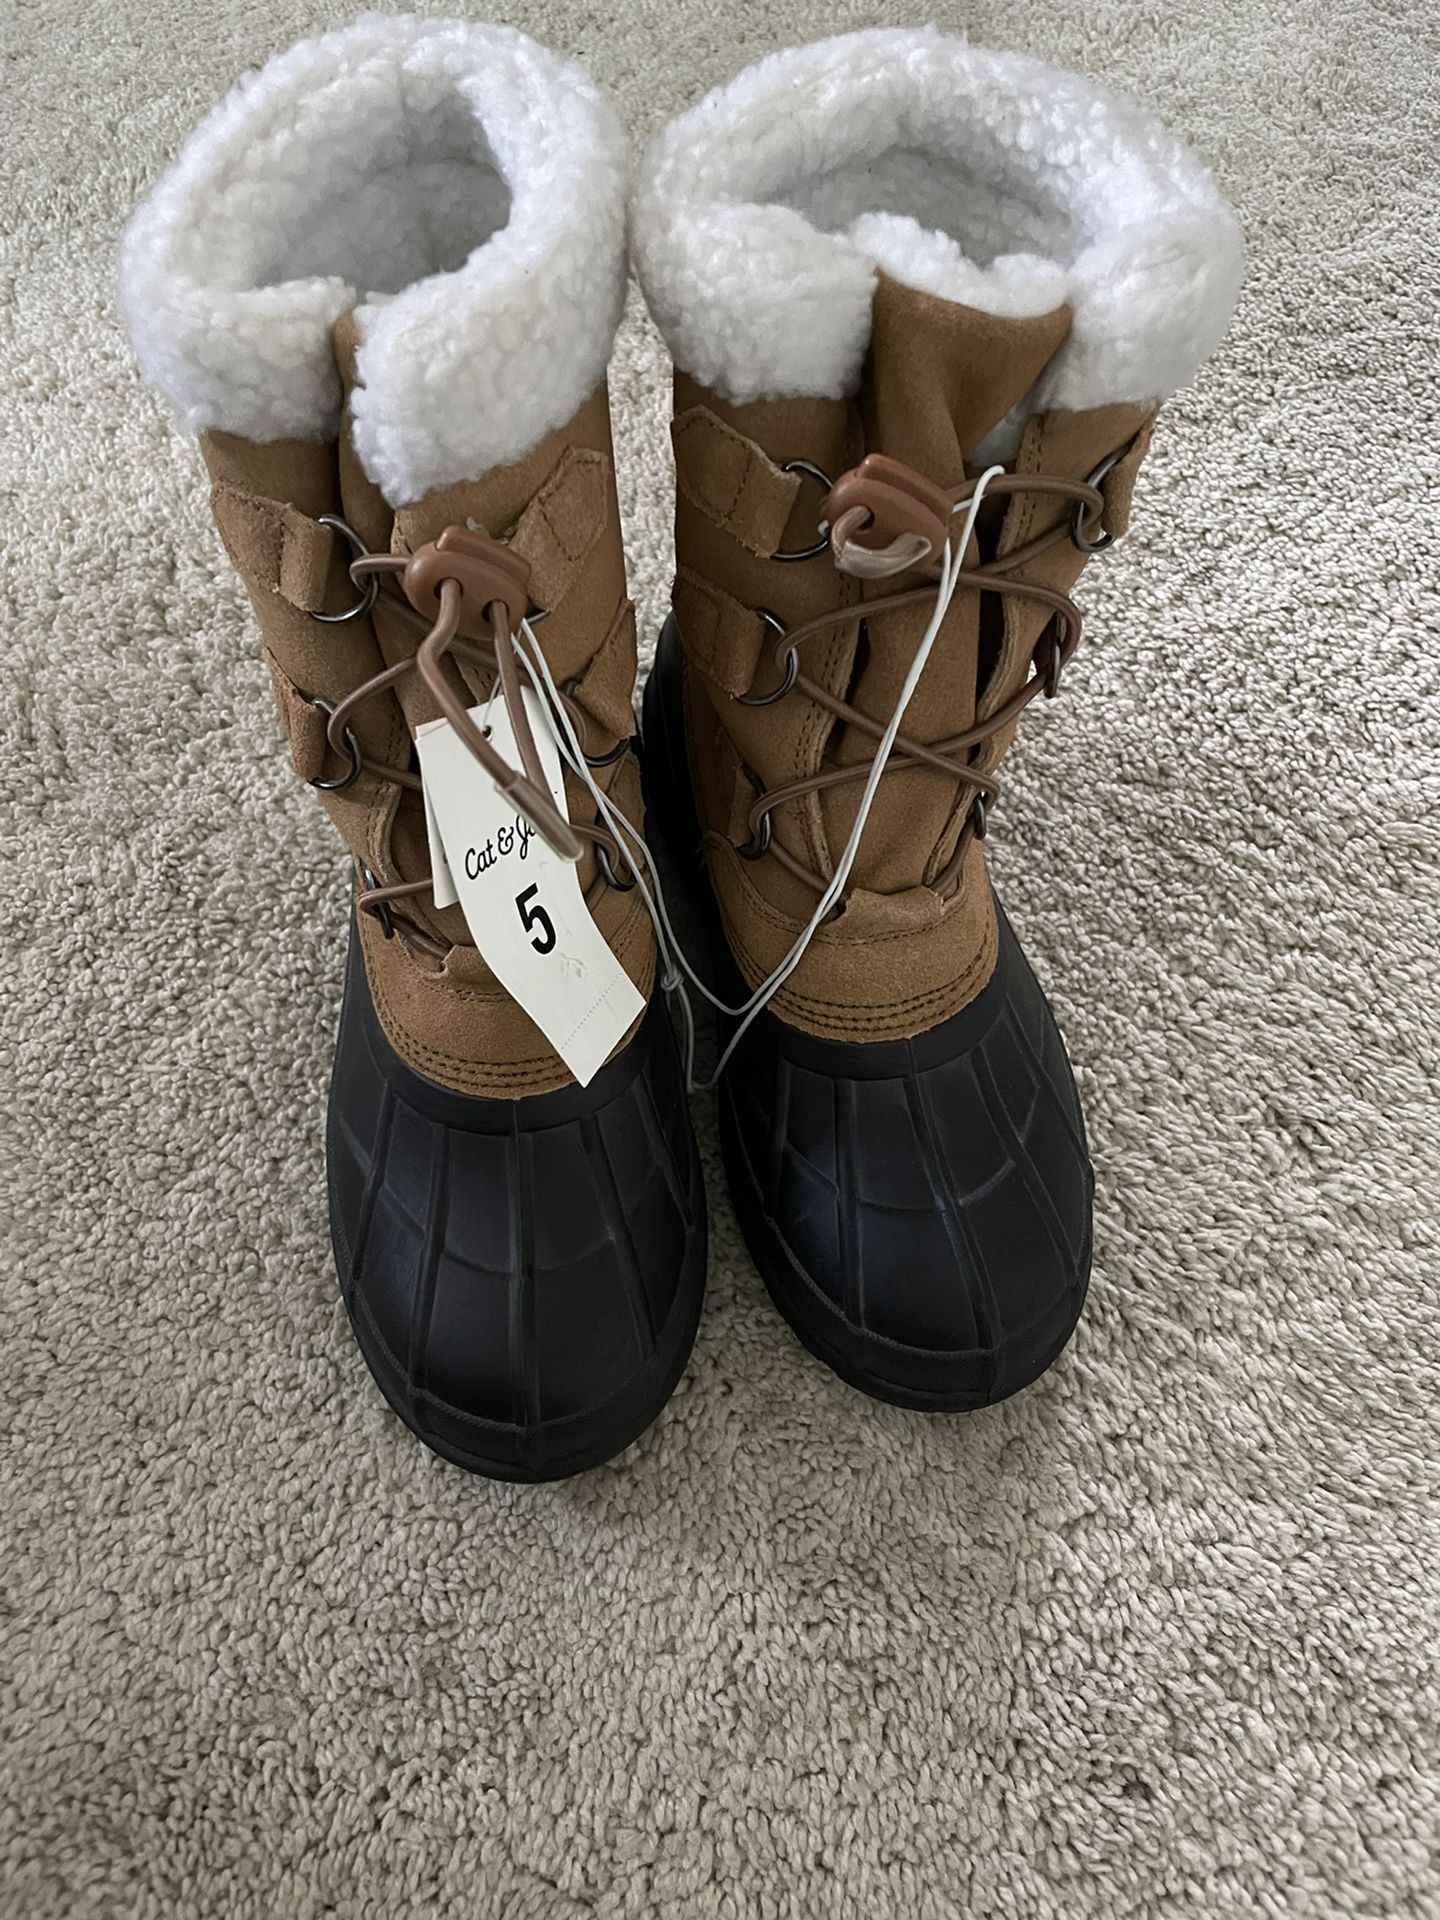 Brand New Snow Boots 